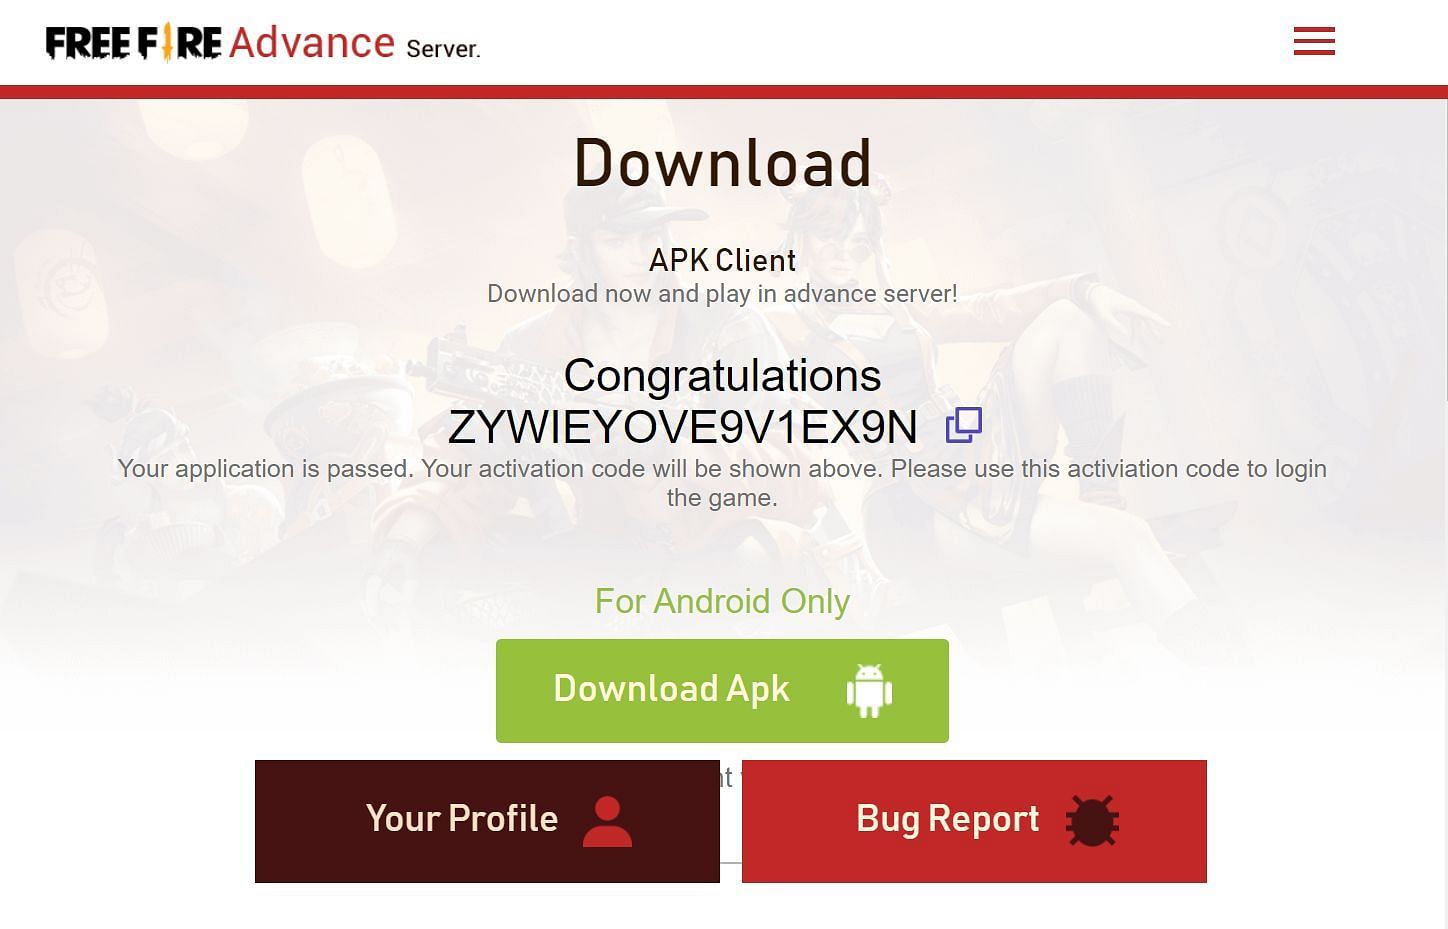 Download the APK and enjoy accessing the Advance Server(Image via Garena)